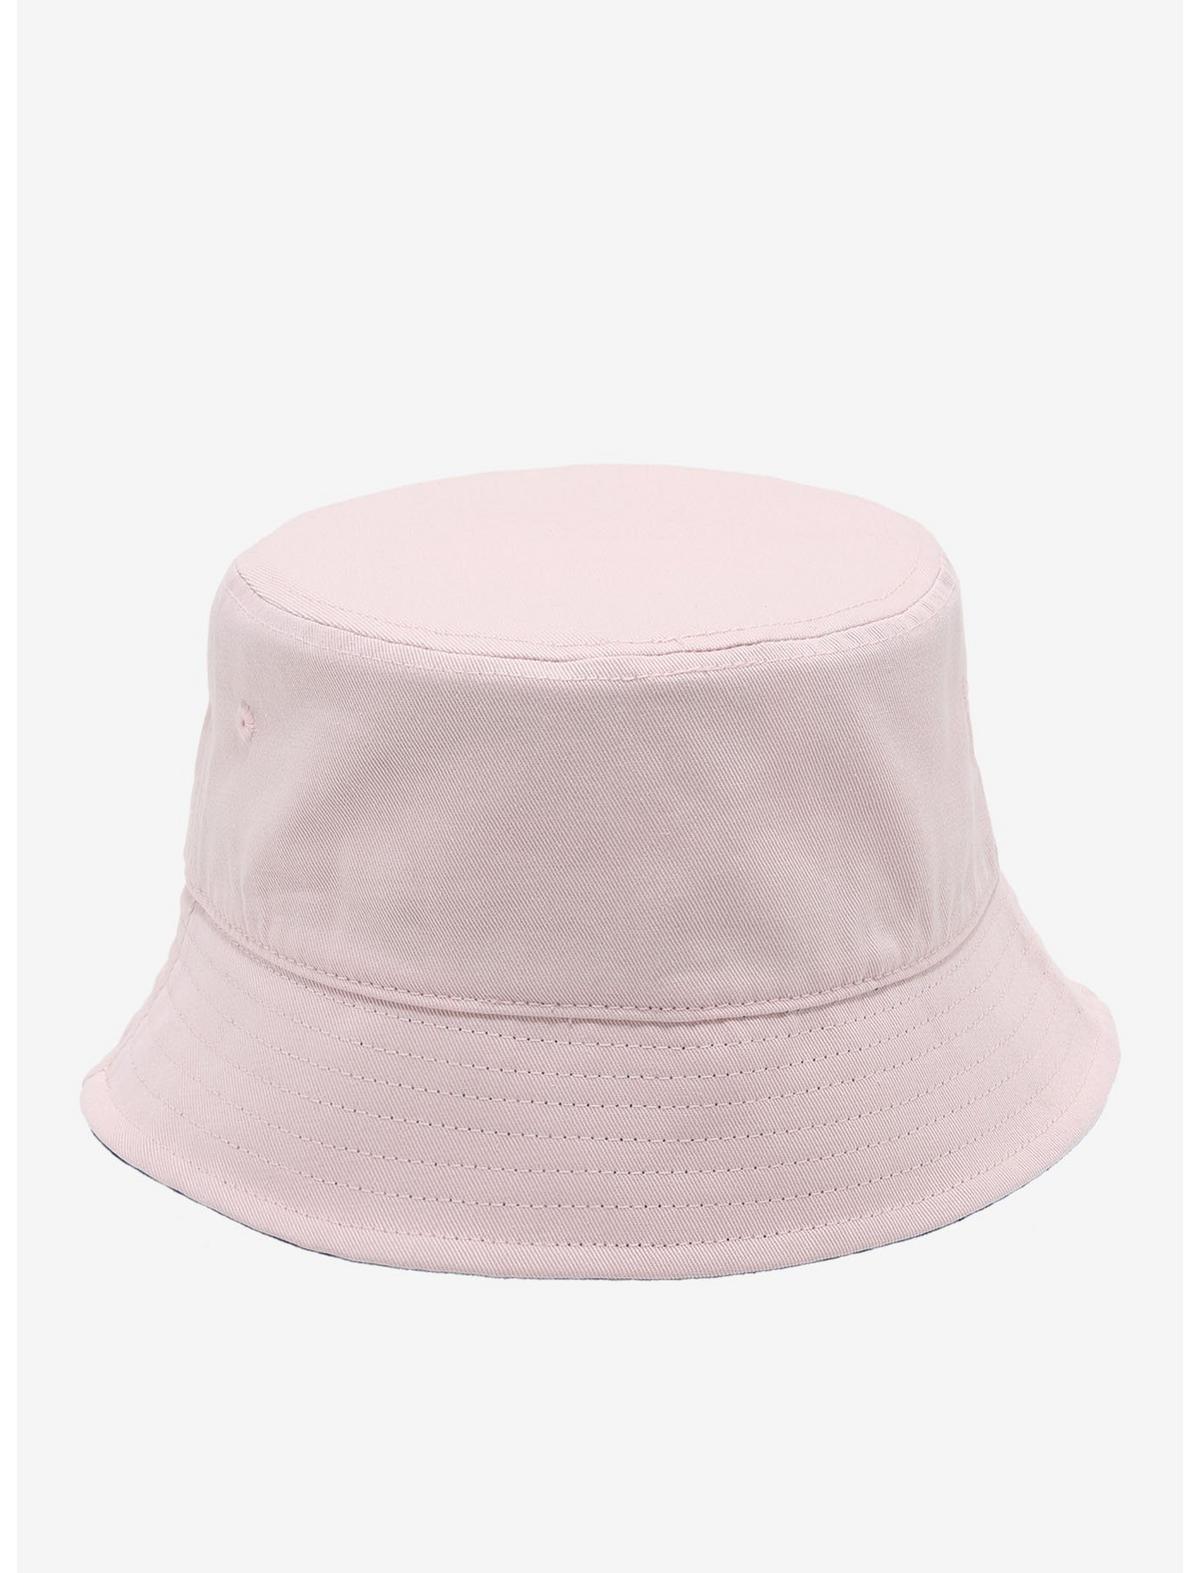 Hot Topic: Sailor Moon Pink Bucket Hat